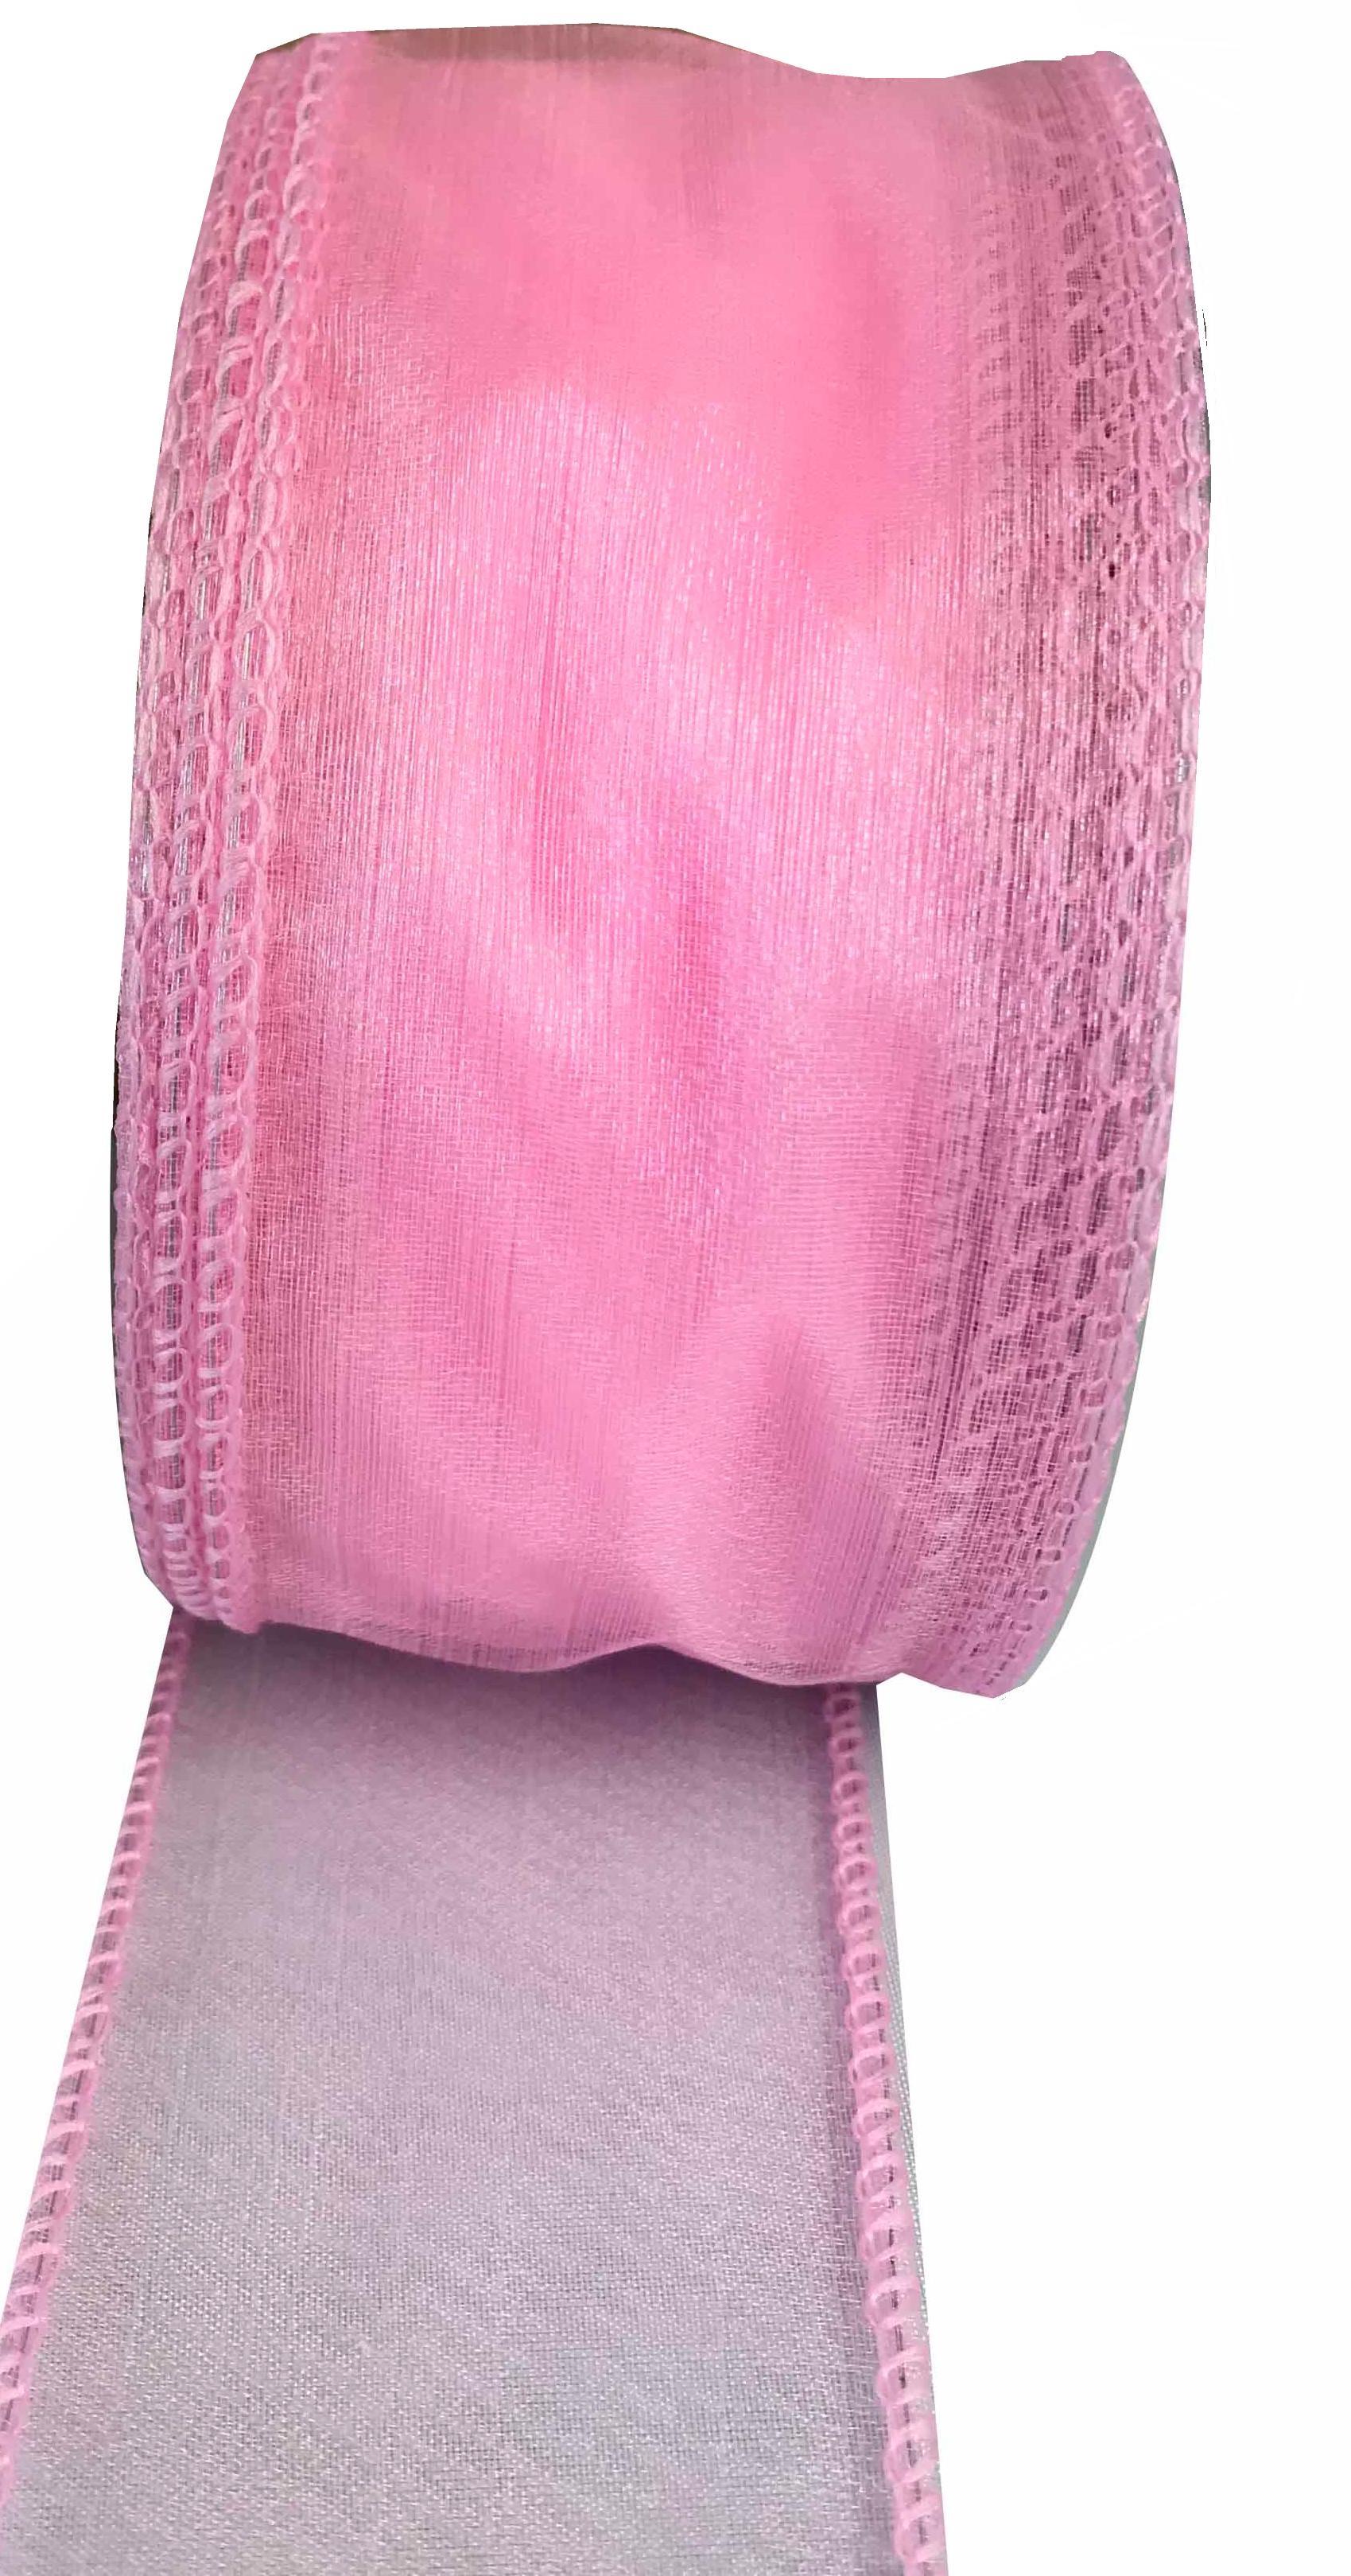 pink organza wired edge ribbon